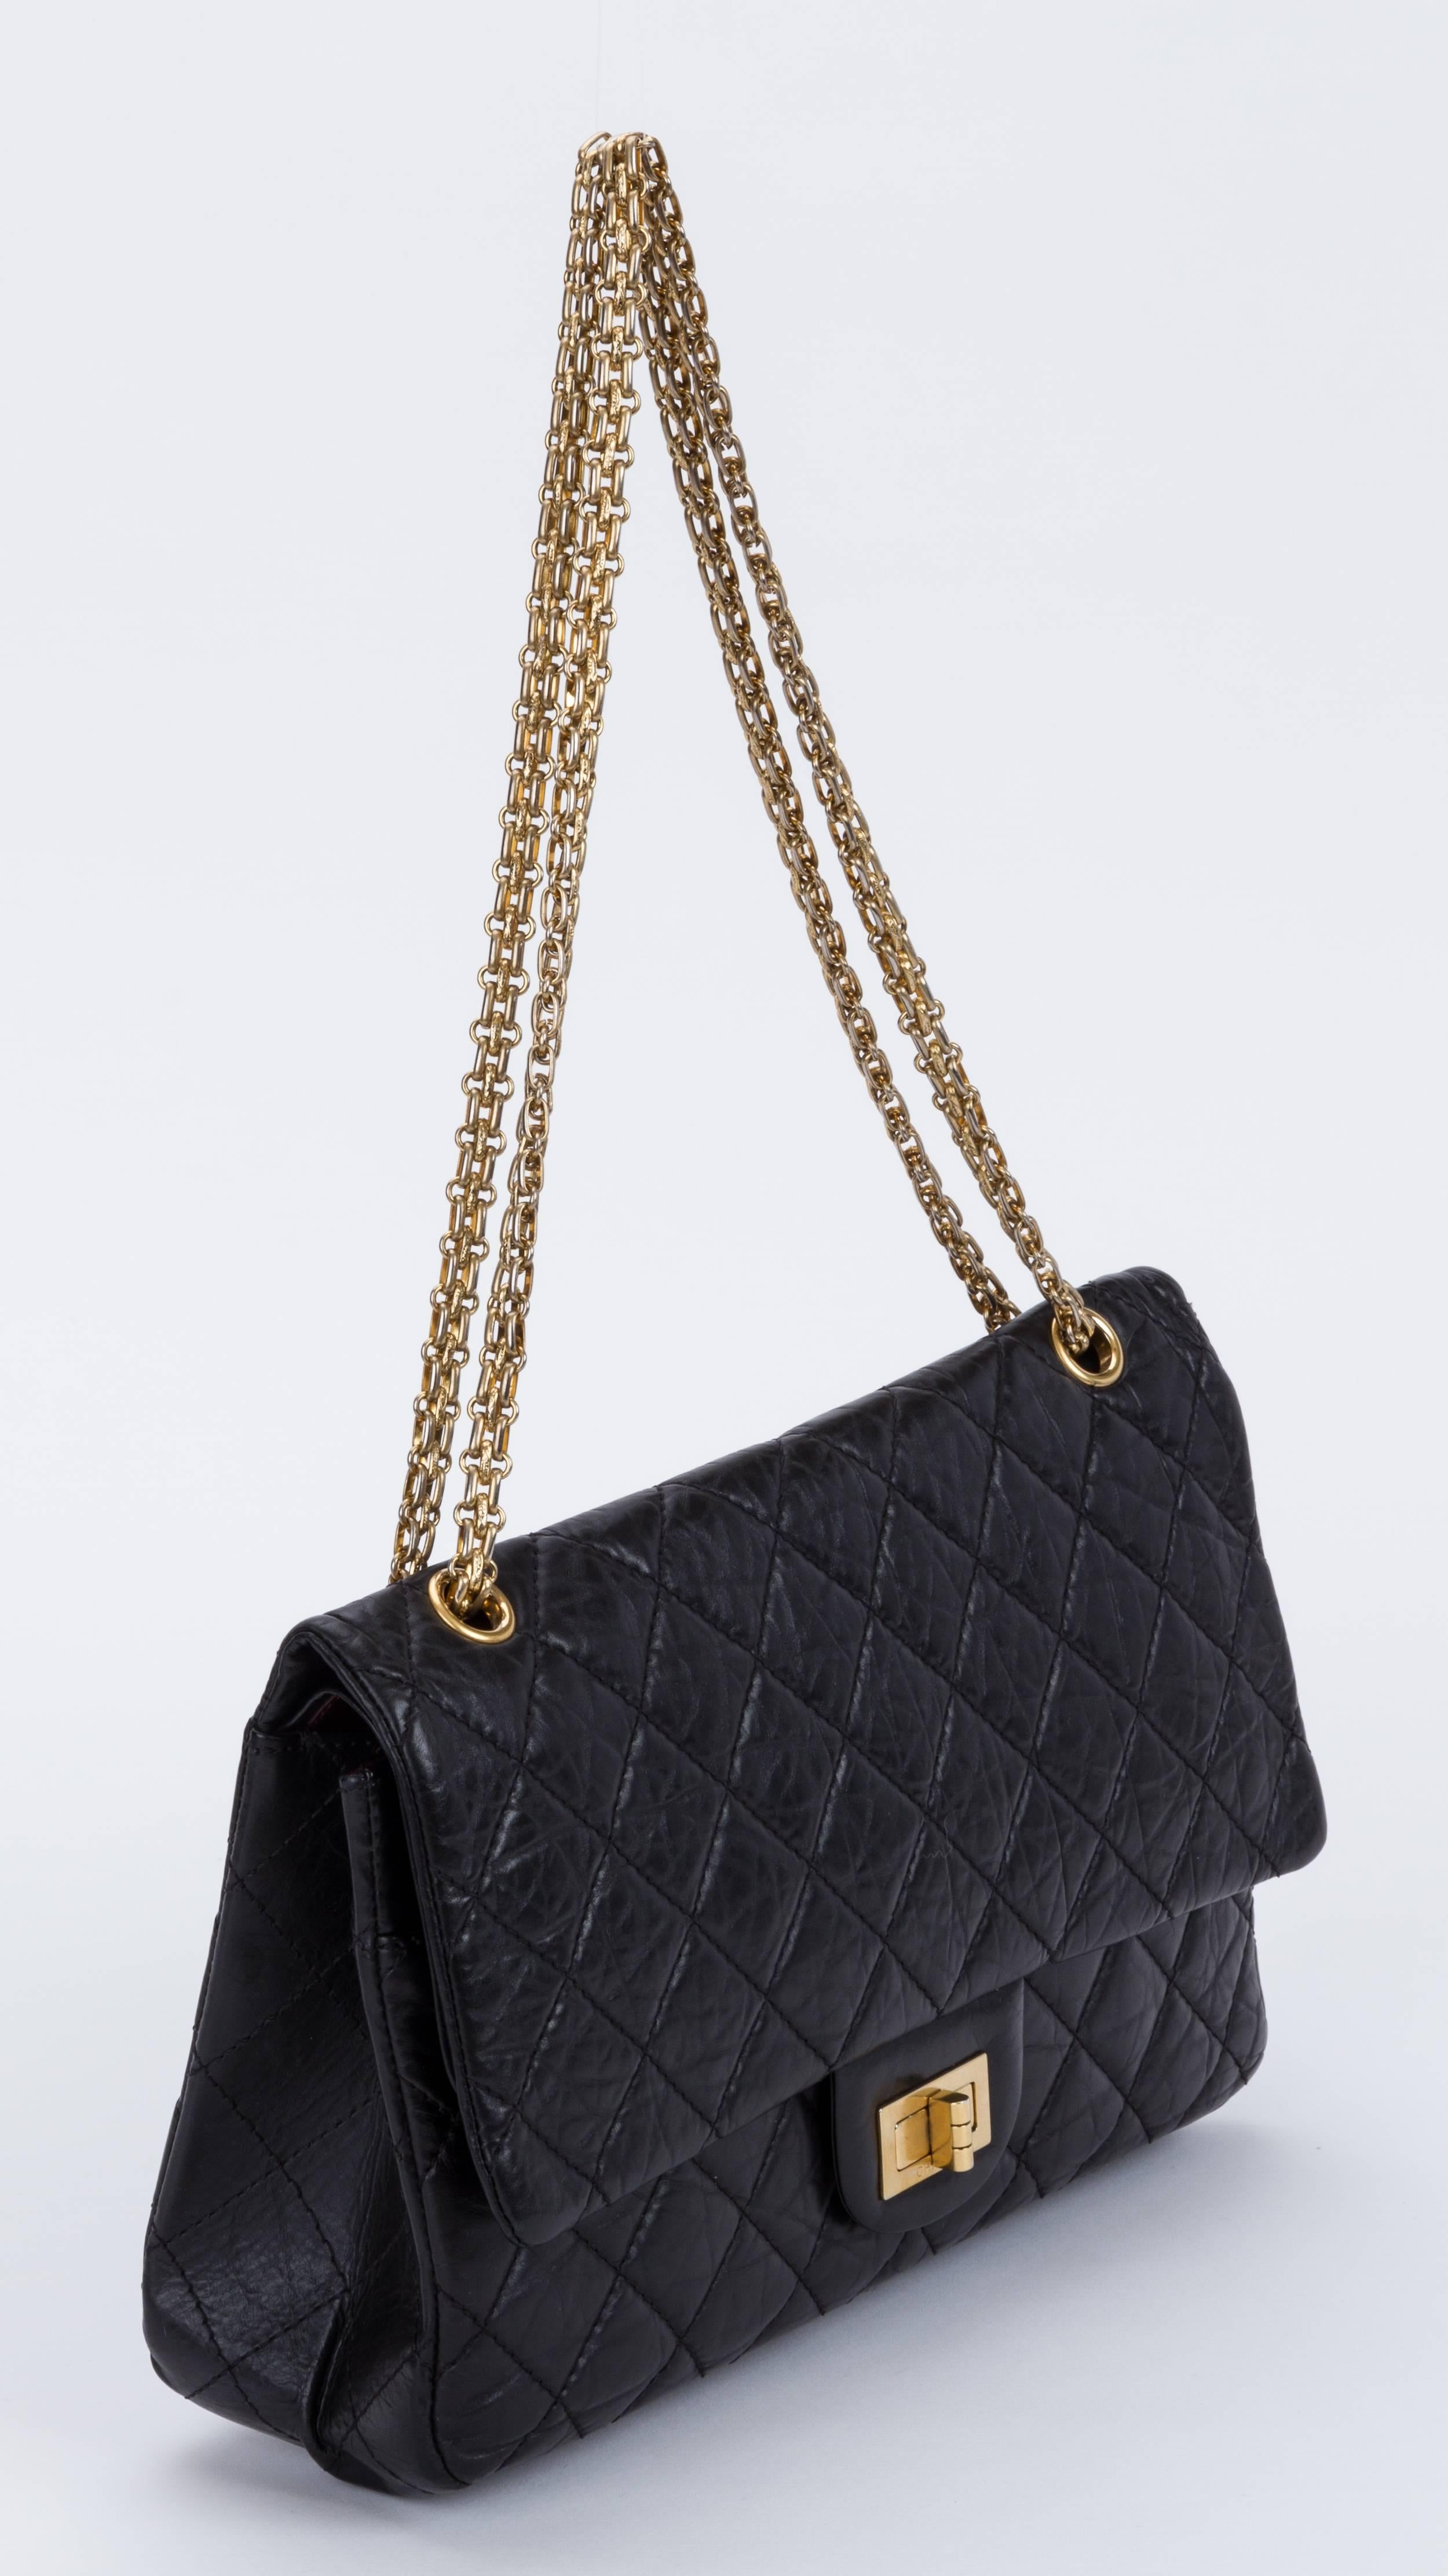 Chanel black distressed metallic reissue jumbo classic flap bag. Gold tone hardware. Shoulder drop, 9.5